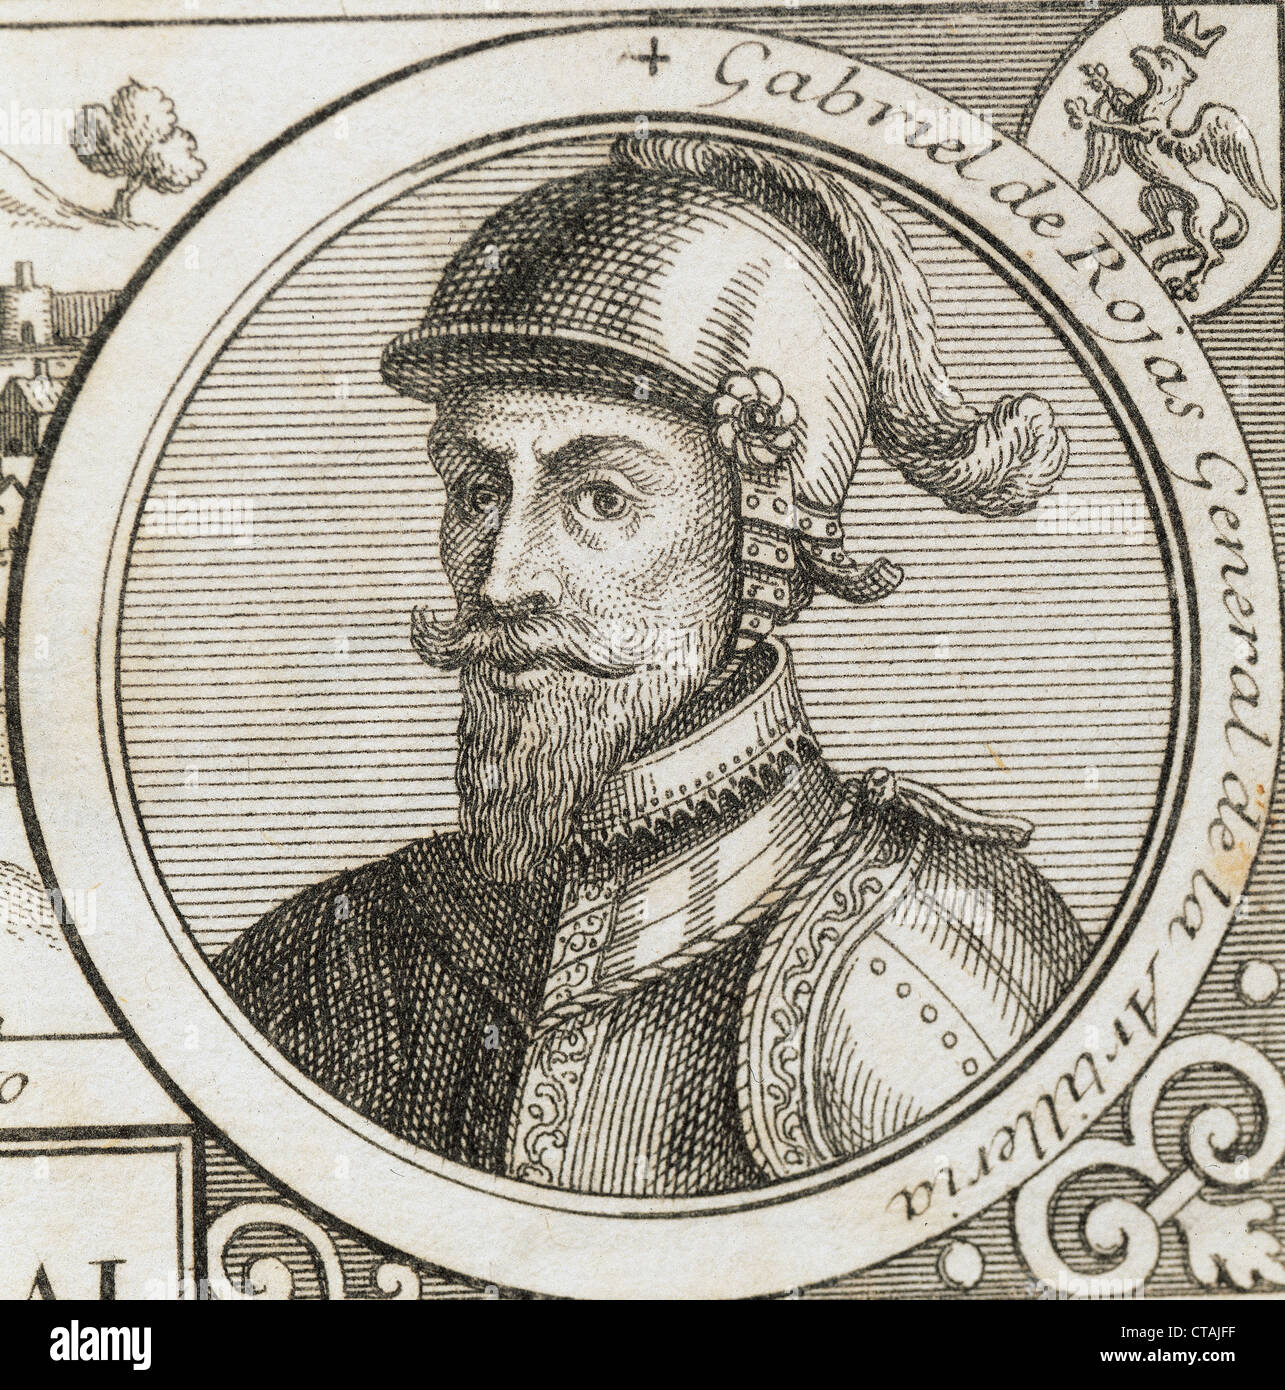 Gabriel de Rojas Cordova (c.1480-1549). Spanische Eroberer. Gravur. Stockfoto